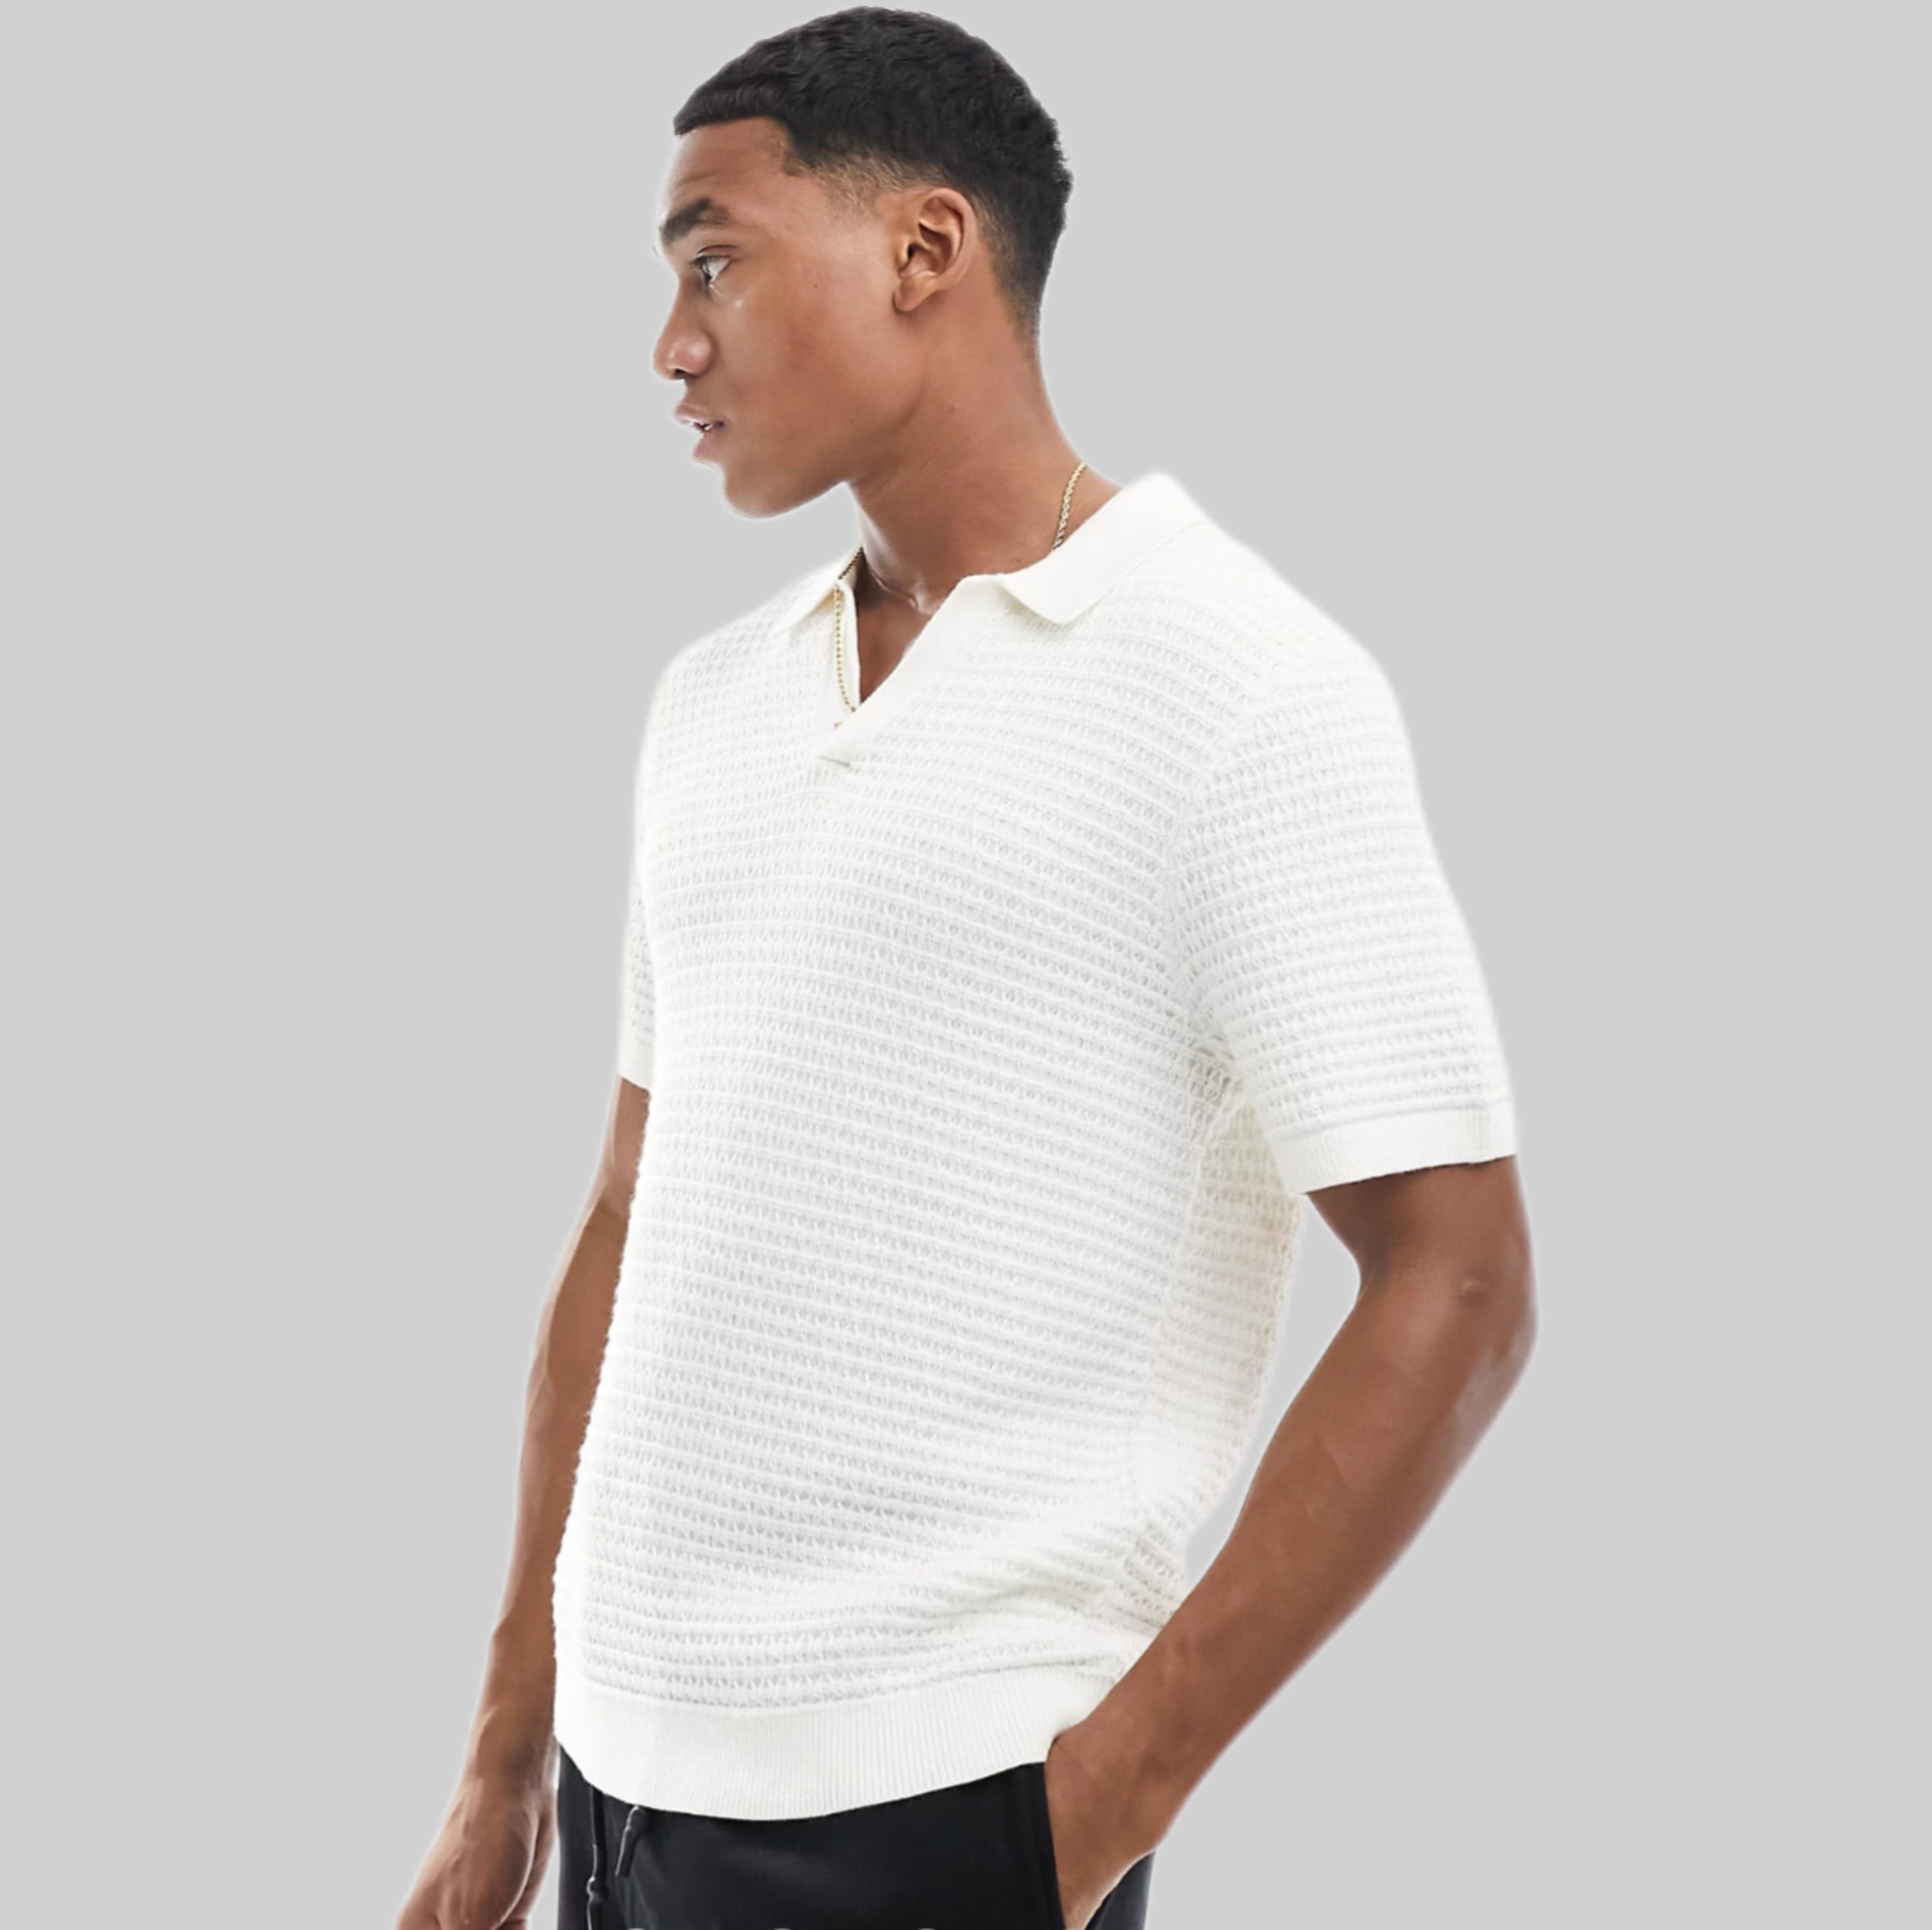 Abercrombie & Fitch polo shirt, men, frontside, white, model